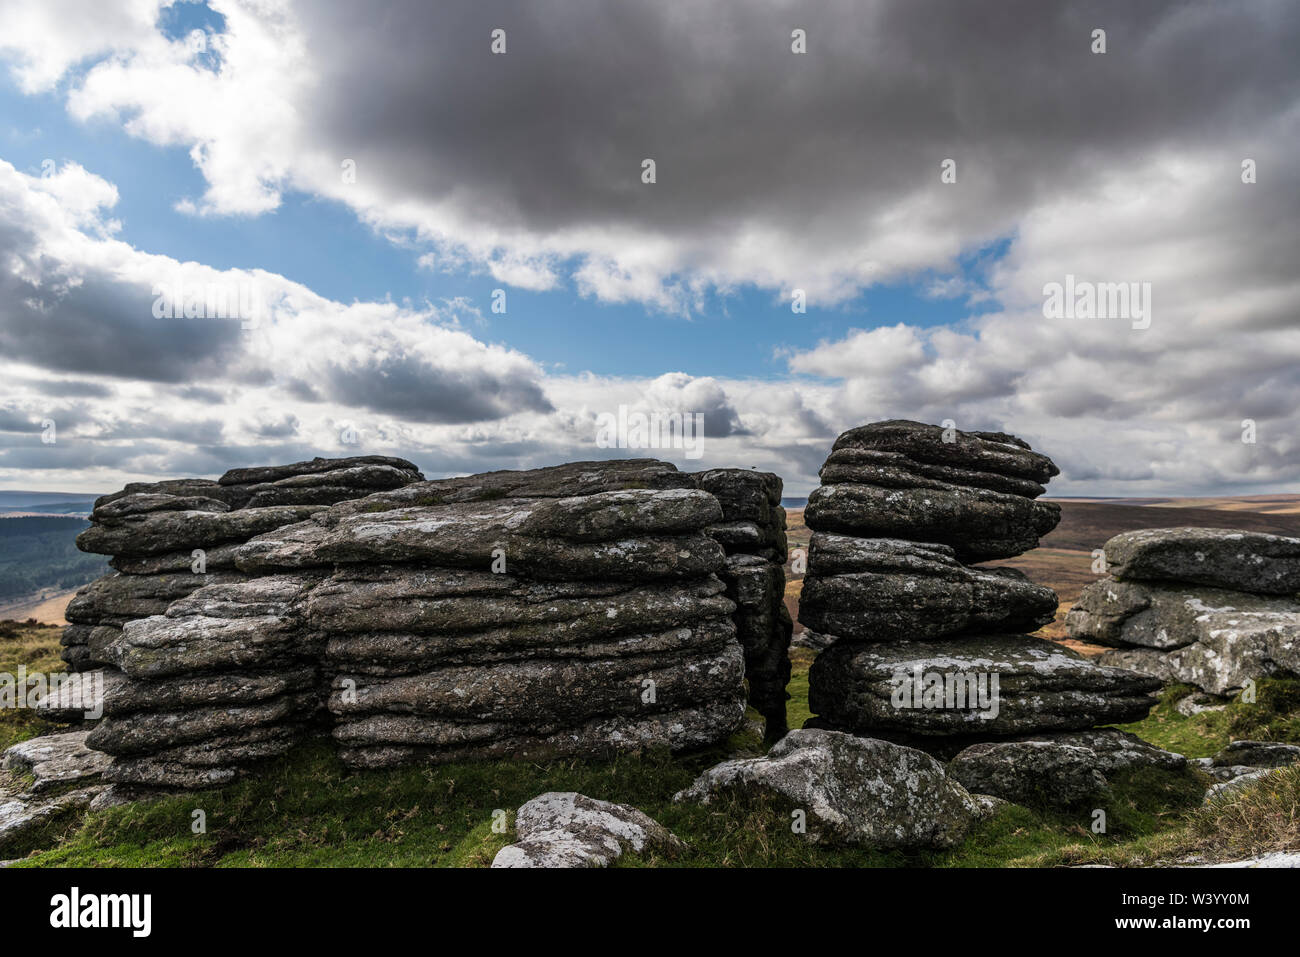 Granite tor on Dartmoor national park, moody, cloudy sky, landscape Stock Photo